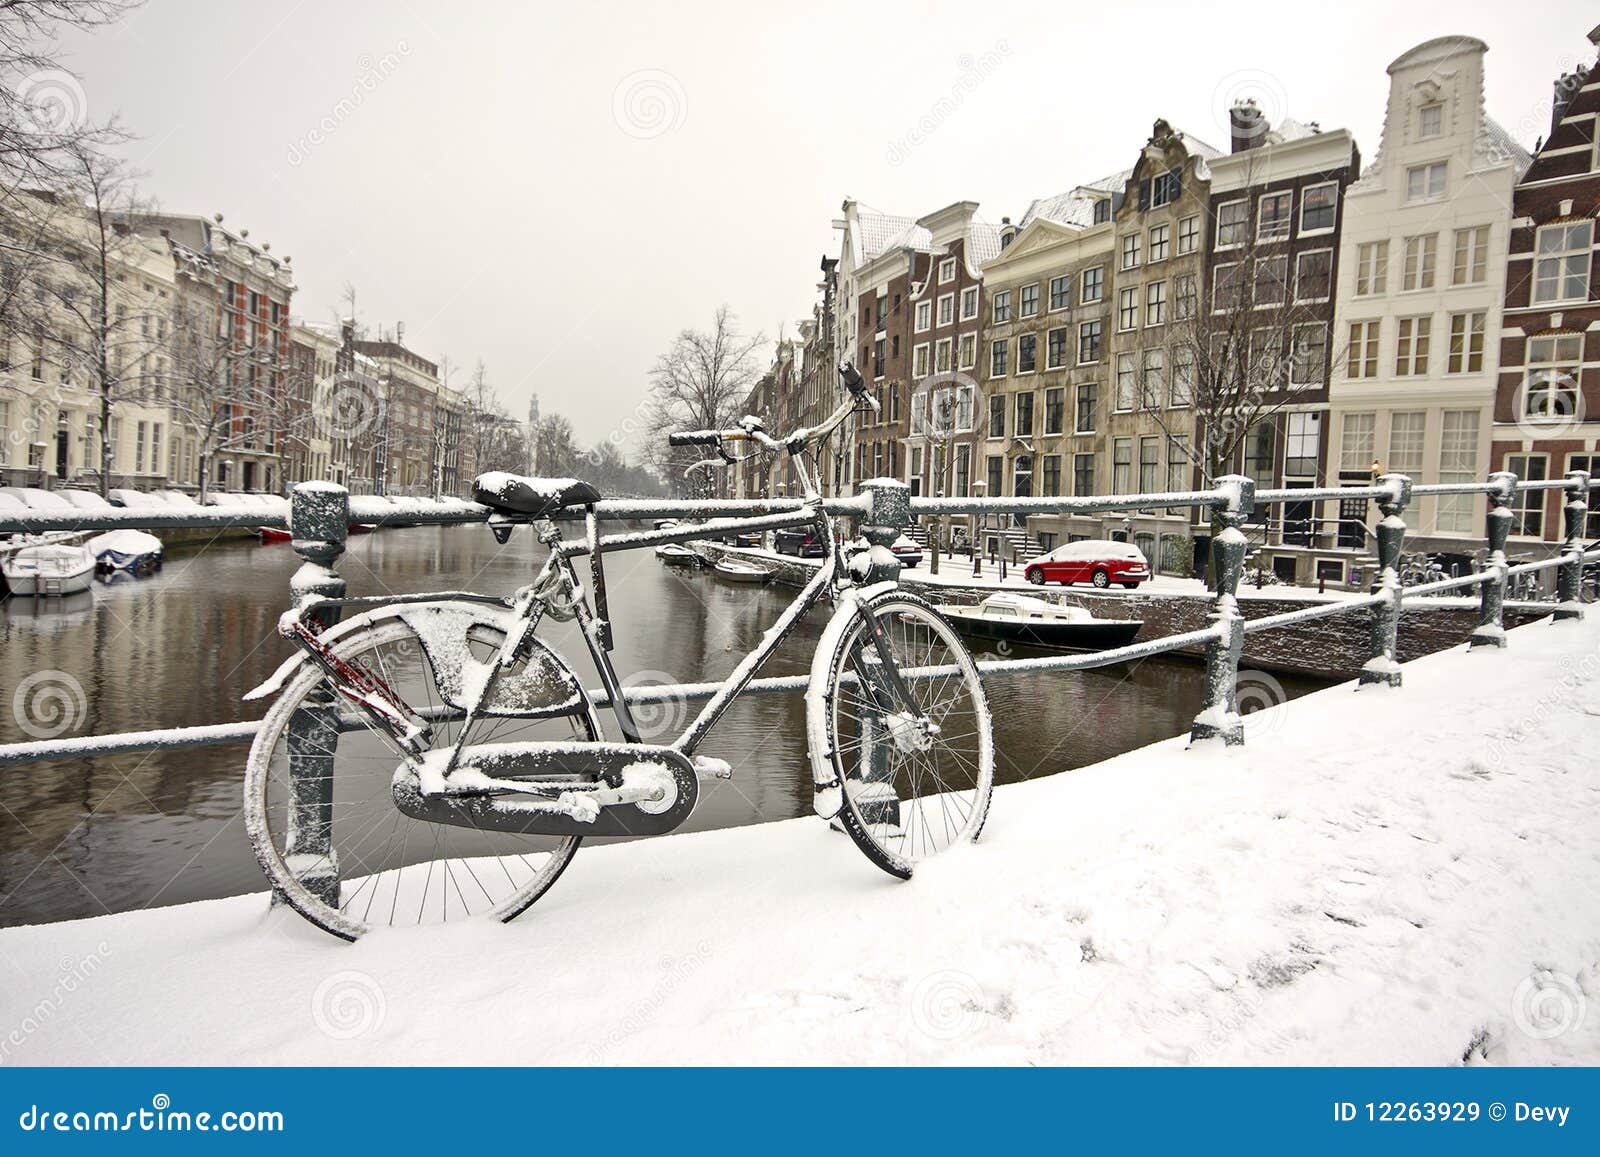 snowy bike in amsterdam the netherlands